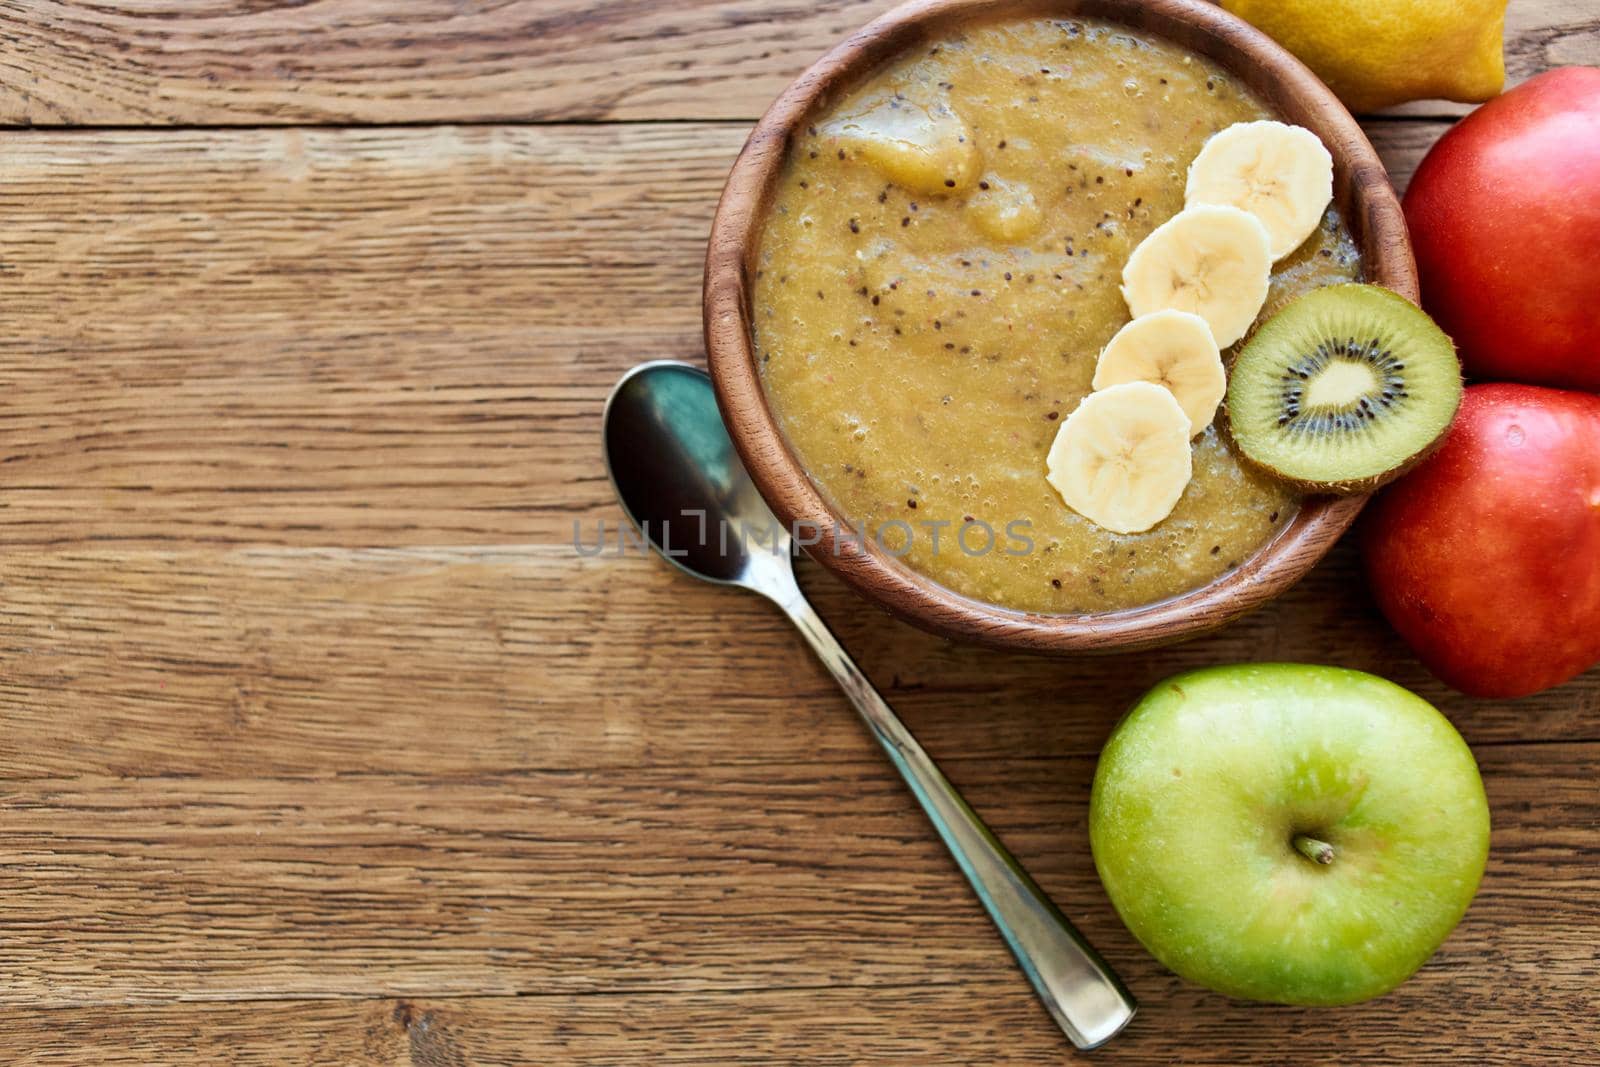 fruit dessert breakfast cereals vitamins organic wood background. High quality photo